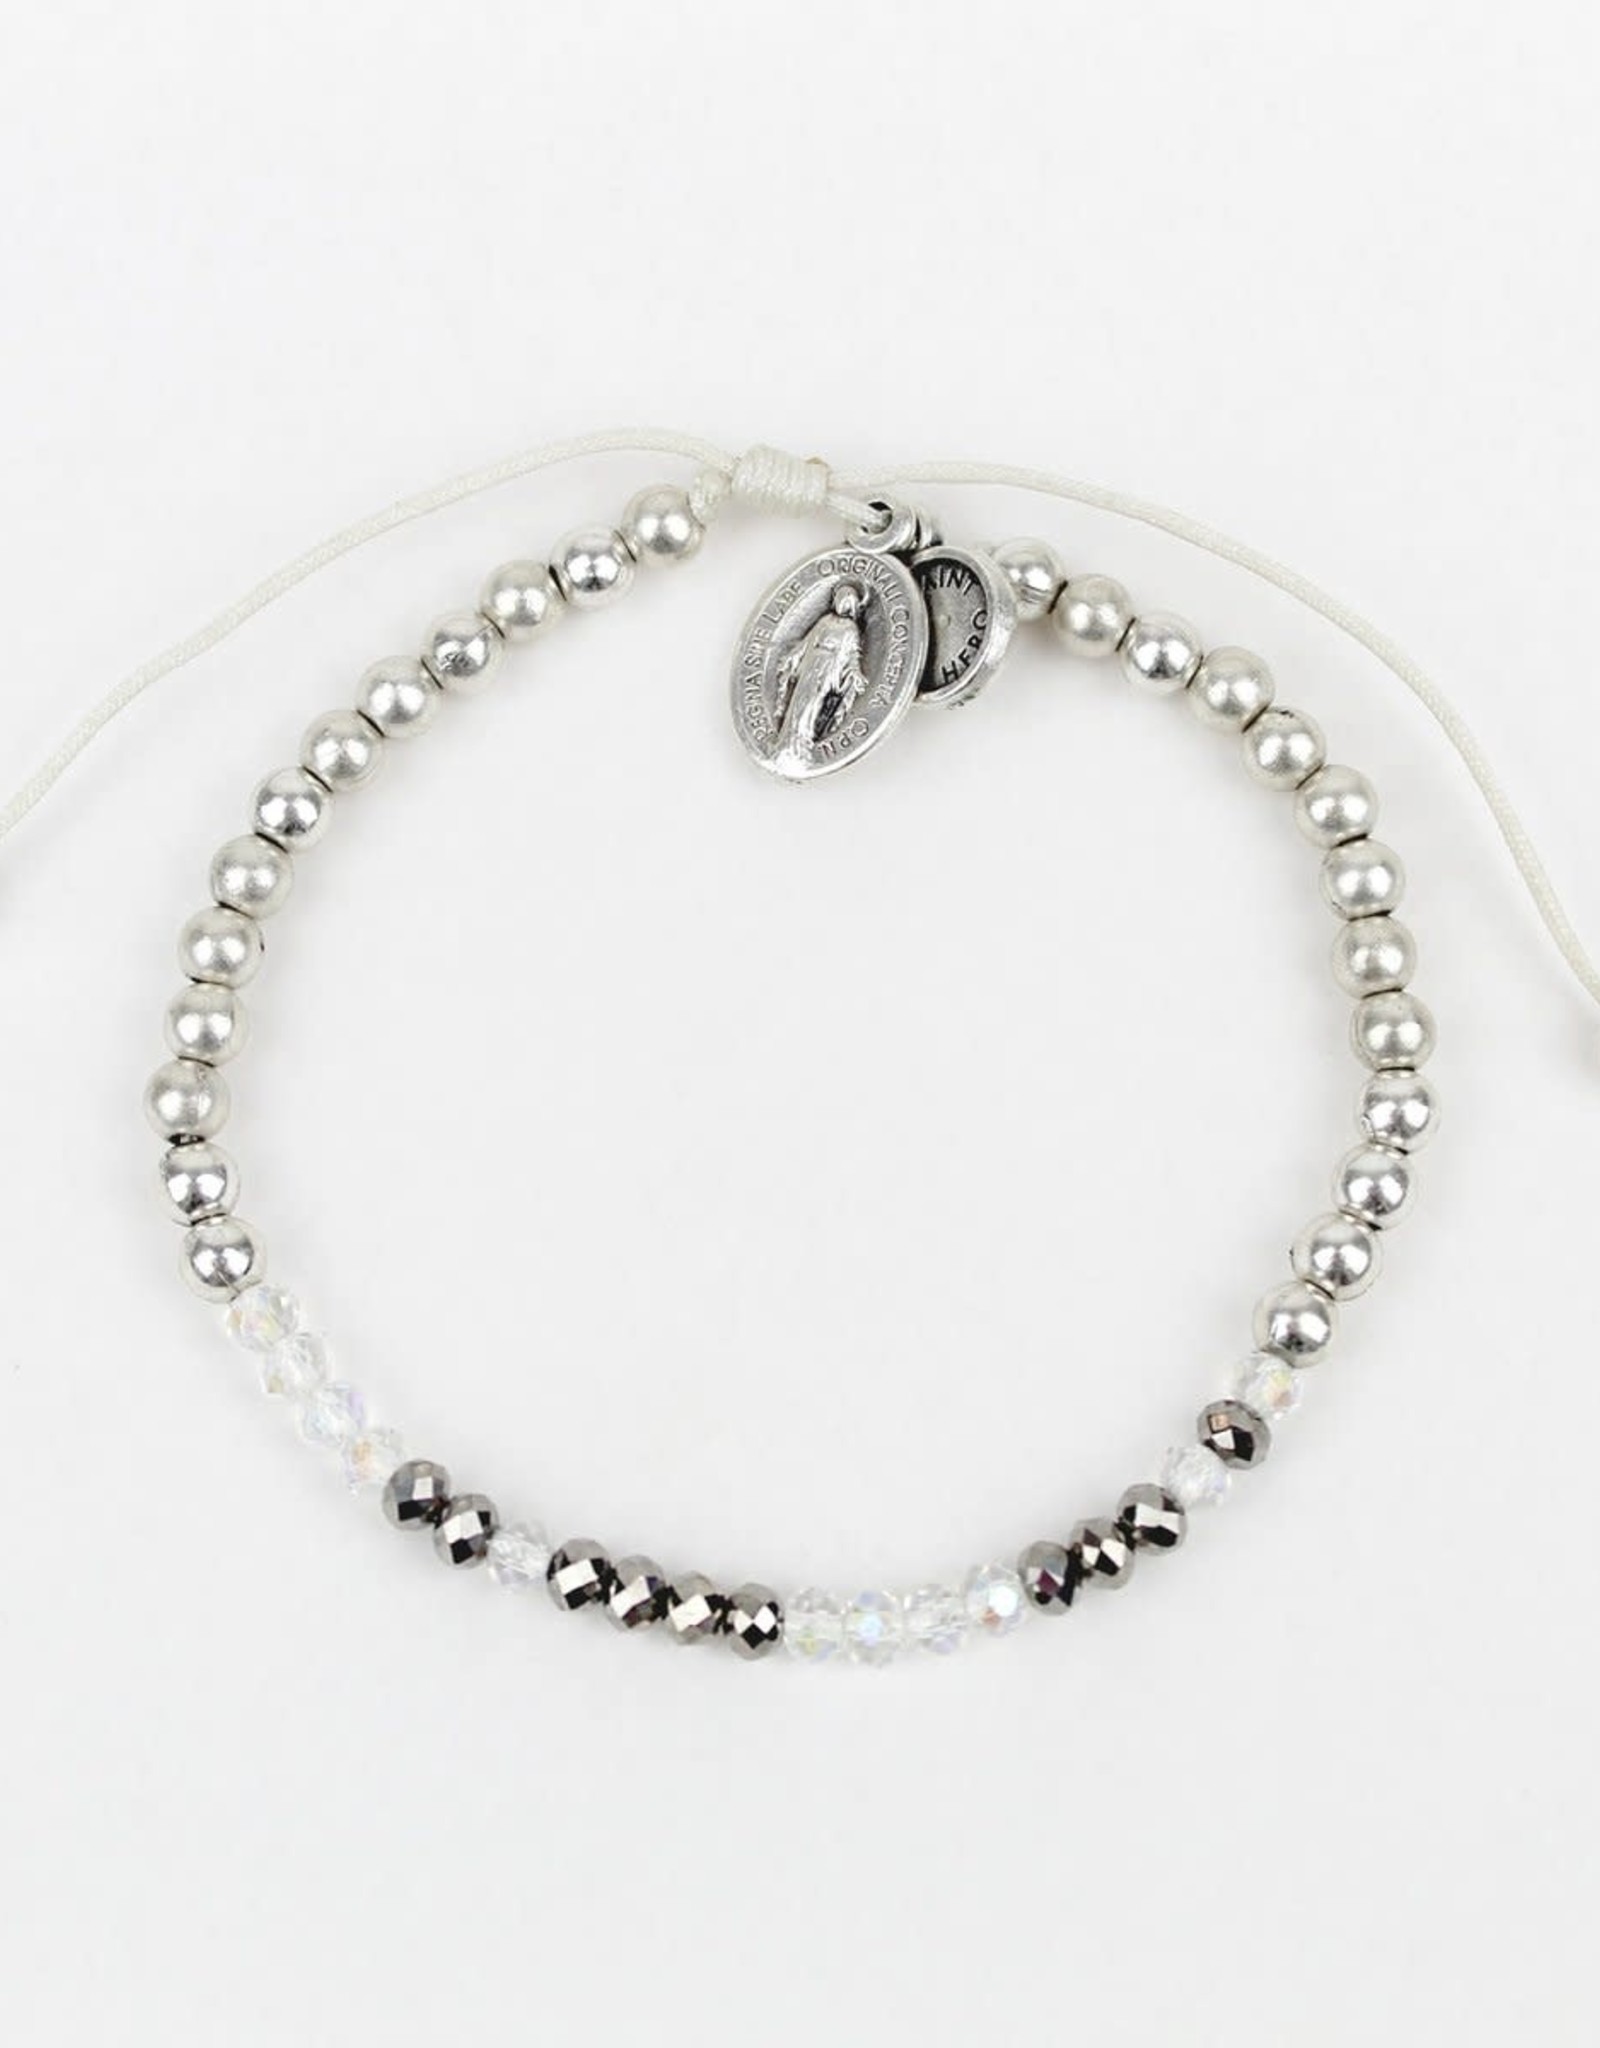 Bracelet - Sponsor. Morse Code - Silver